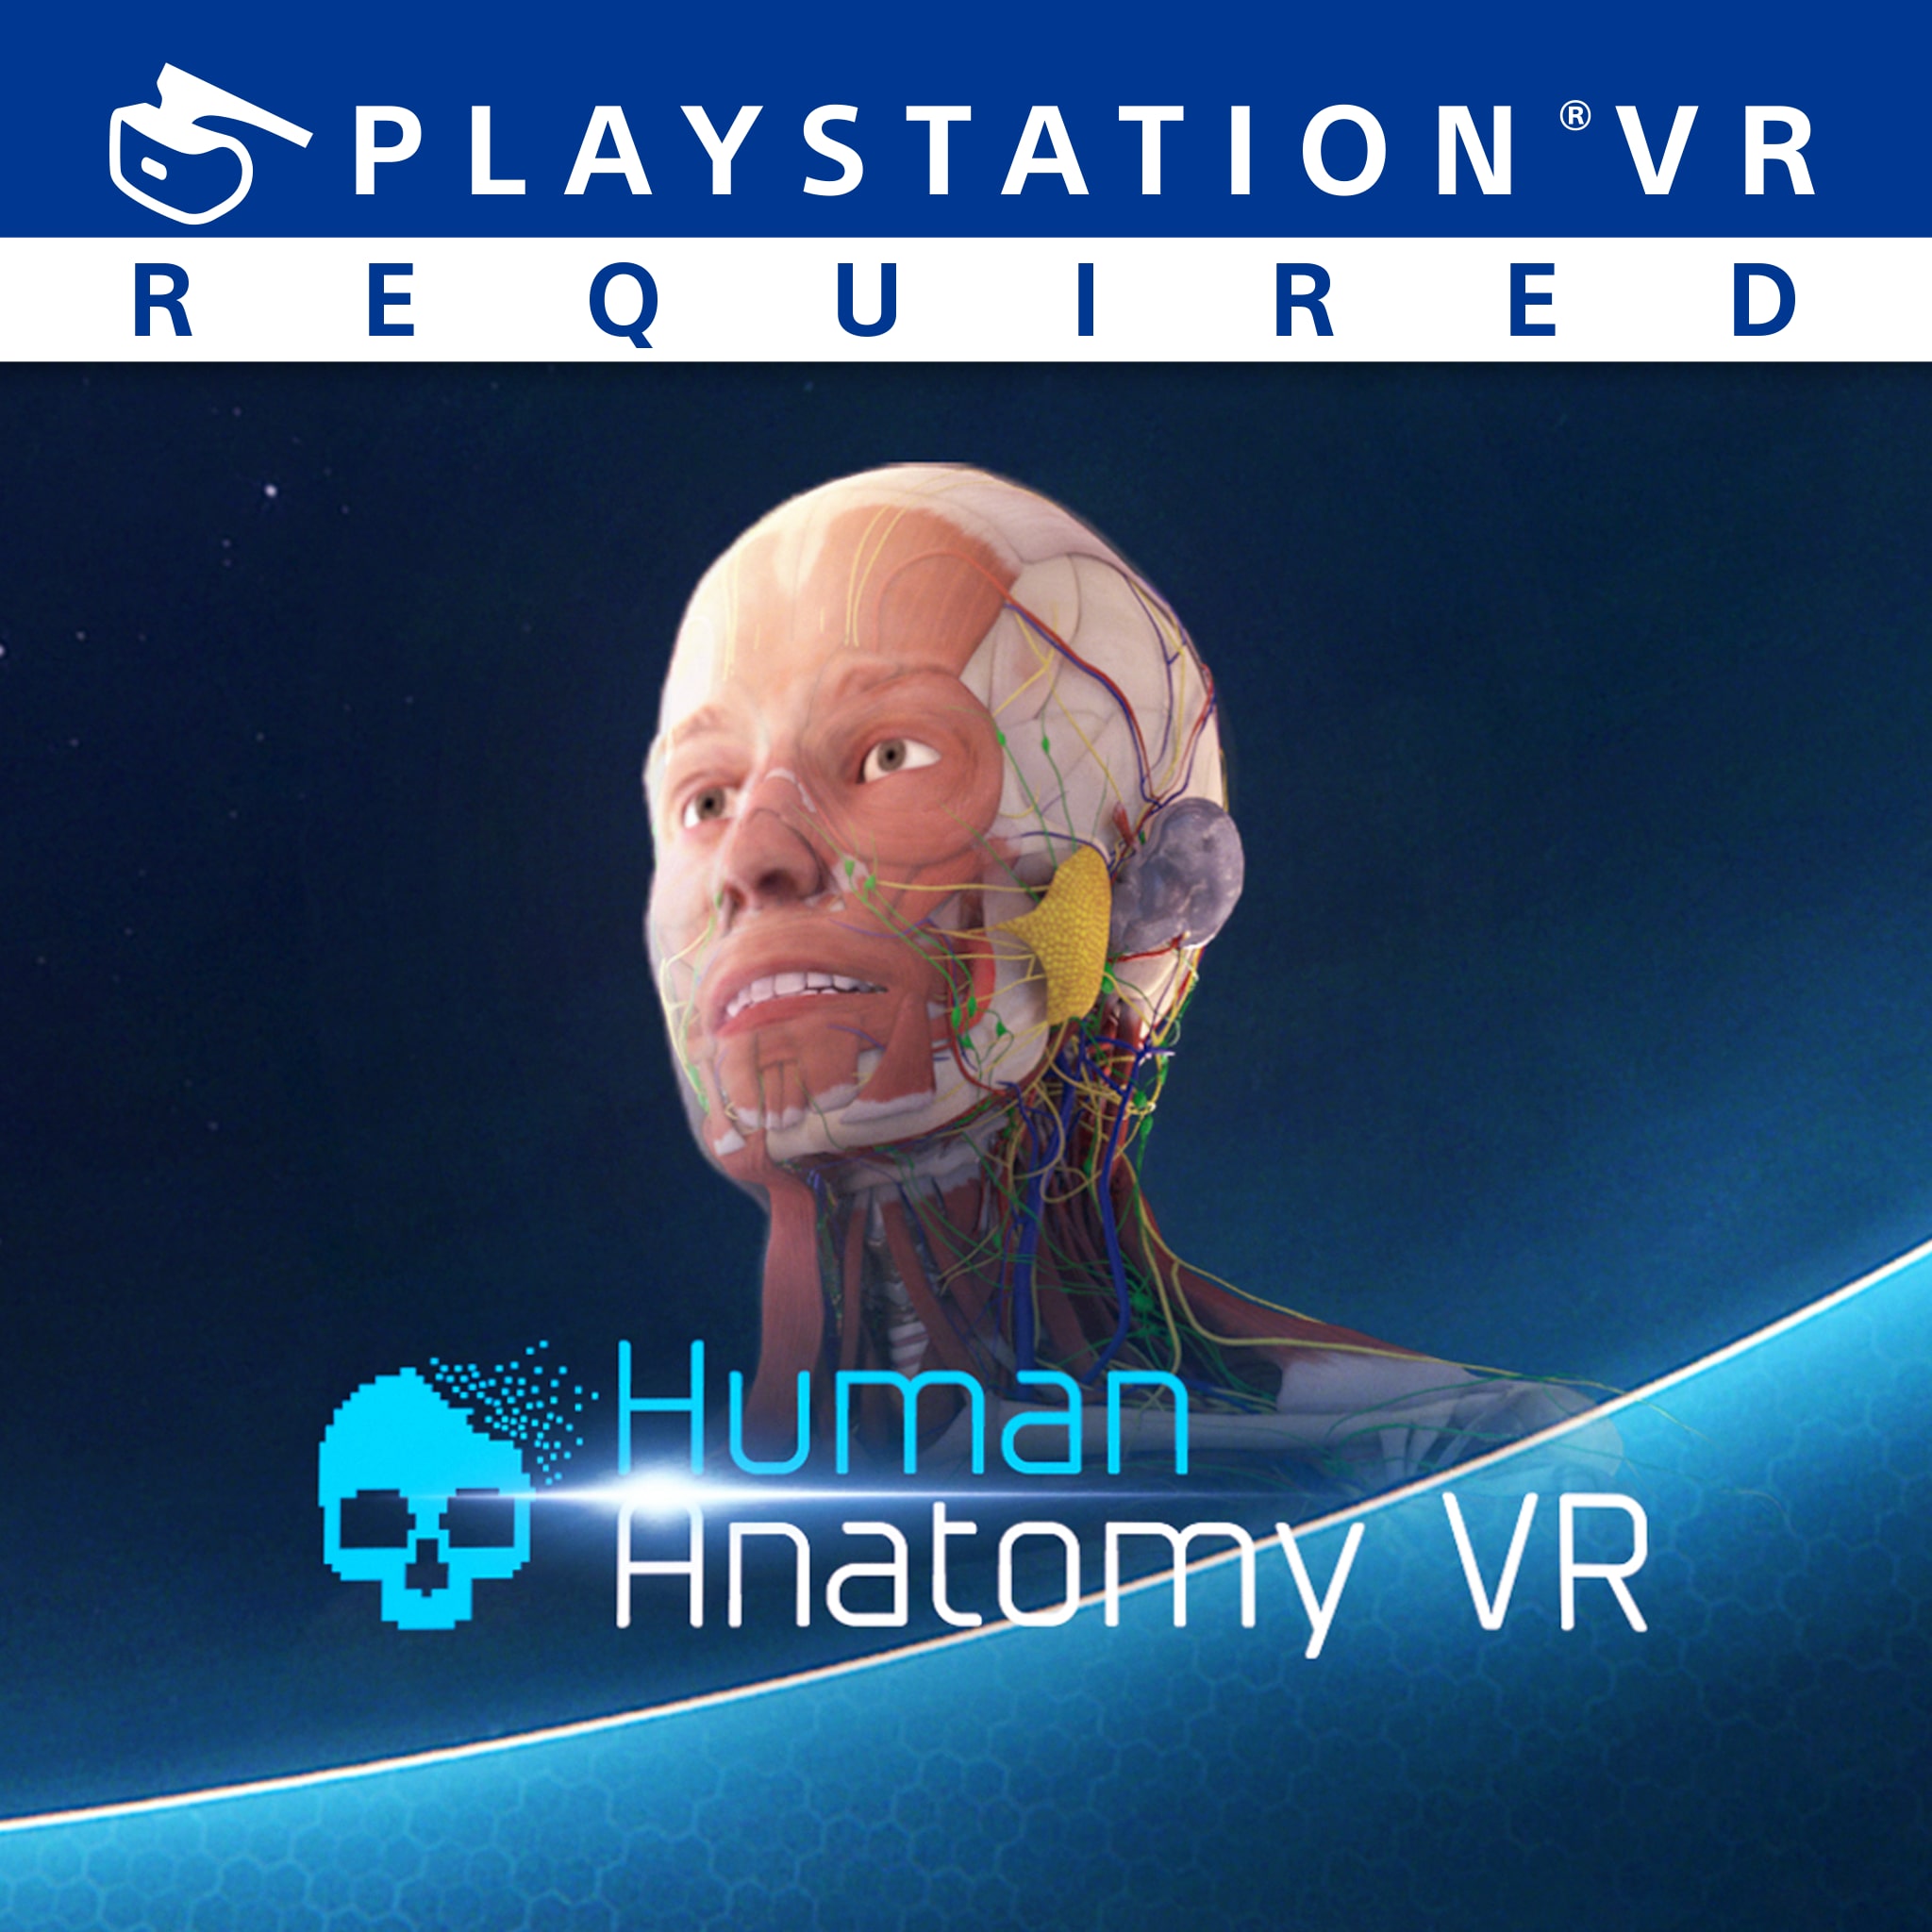 Human Anatomy VR